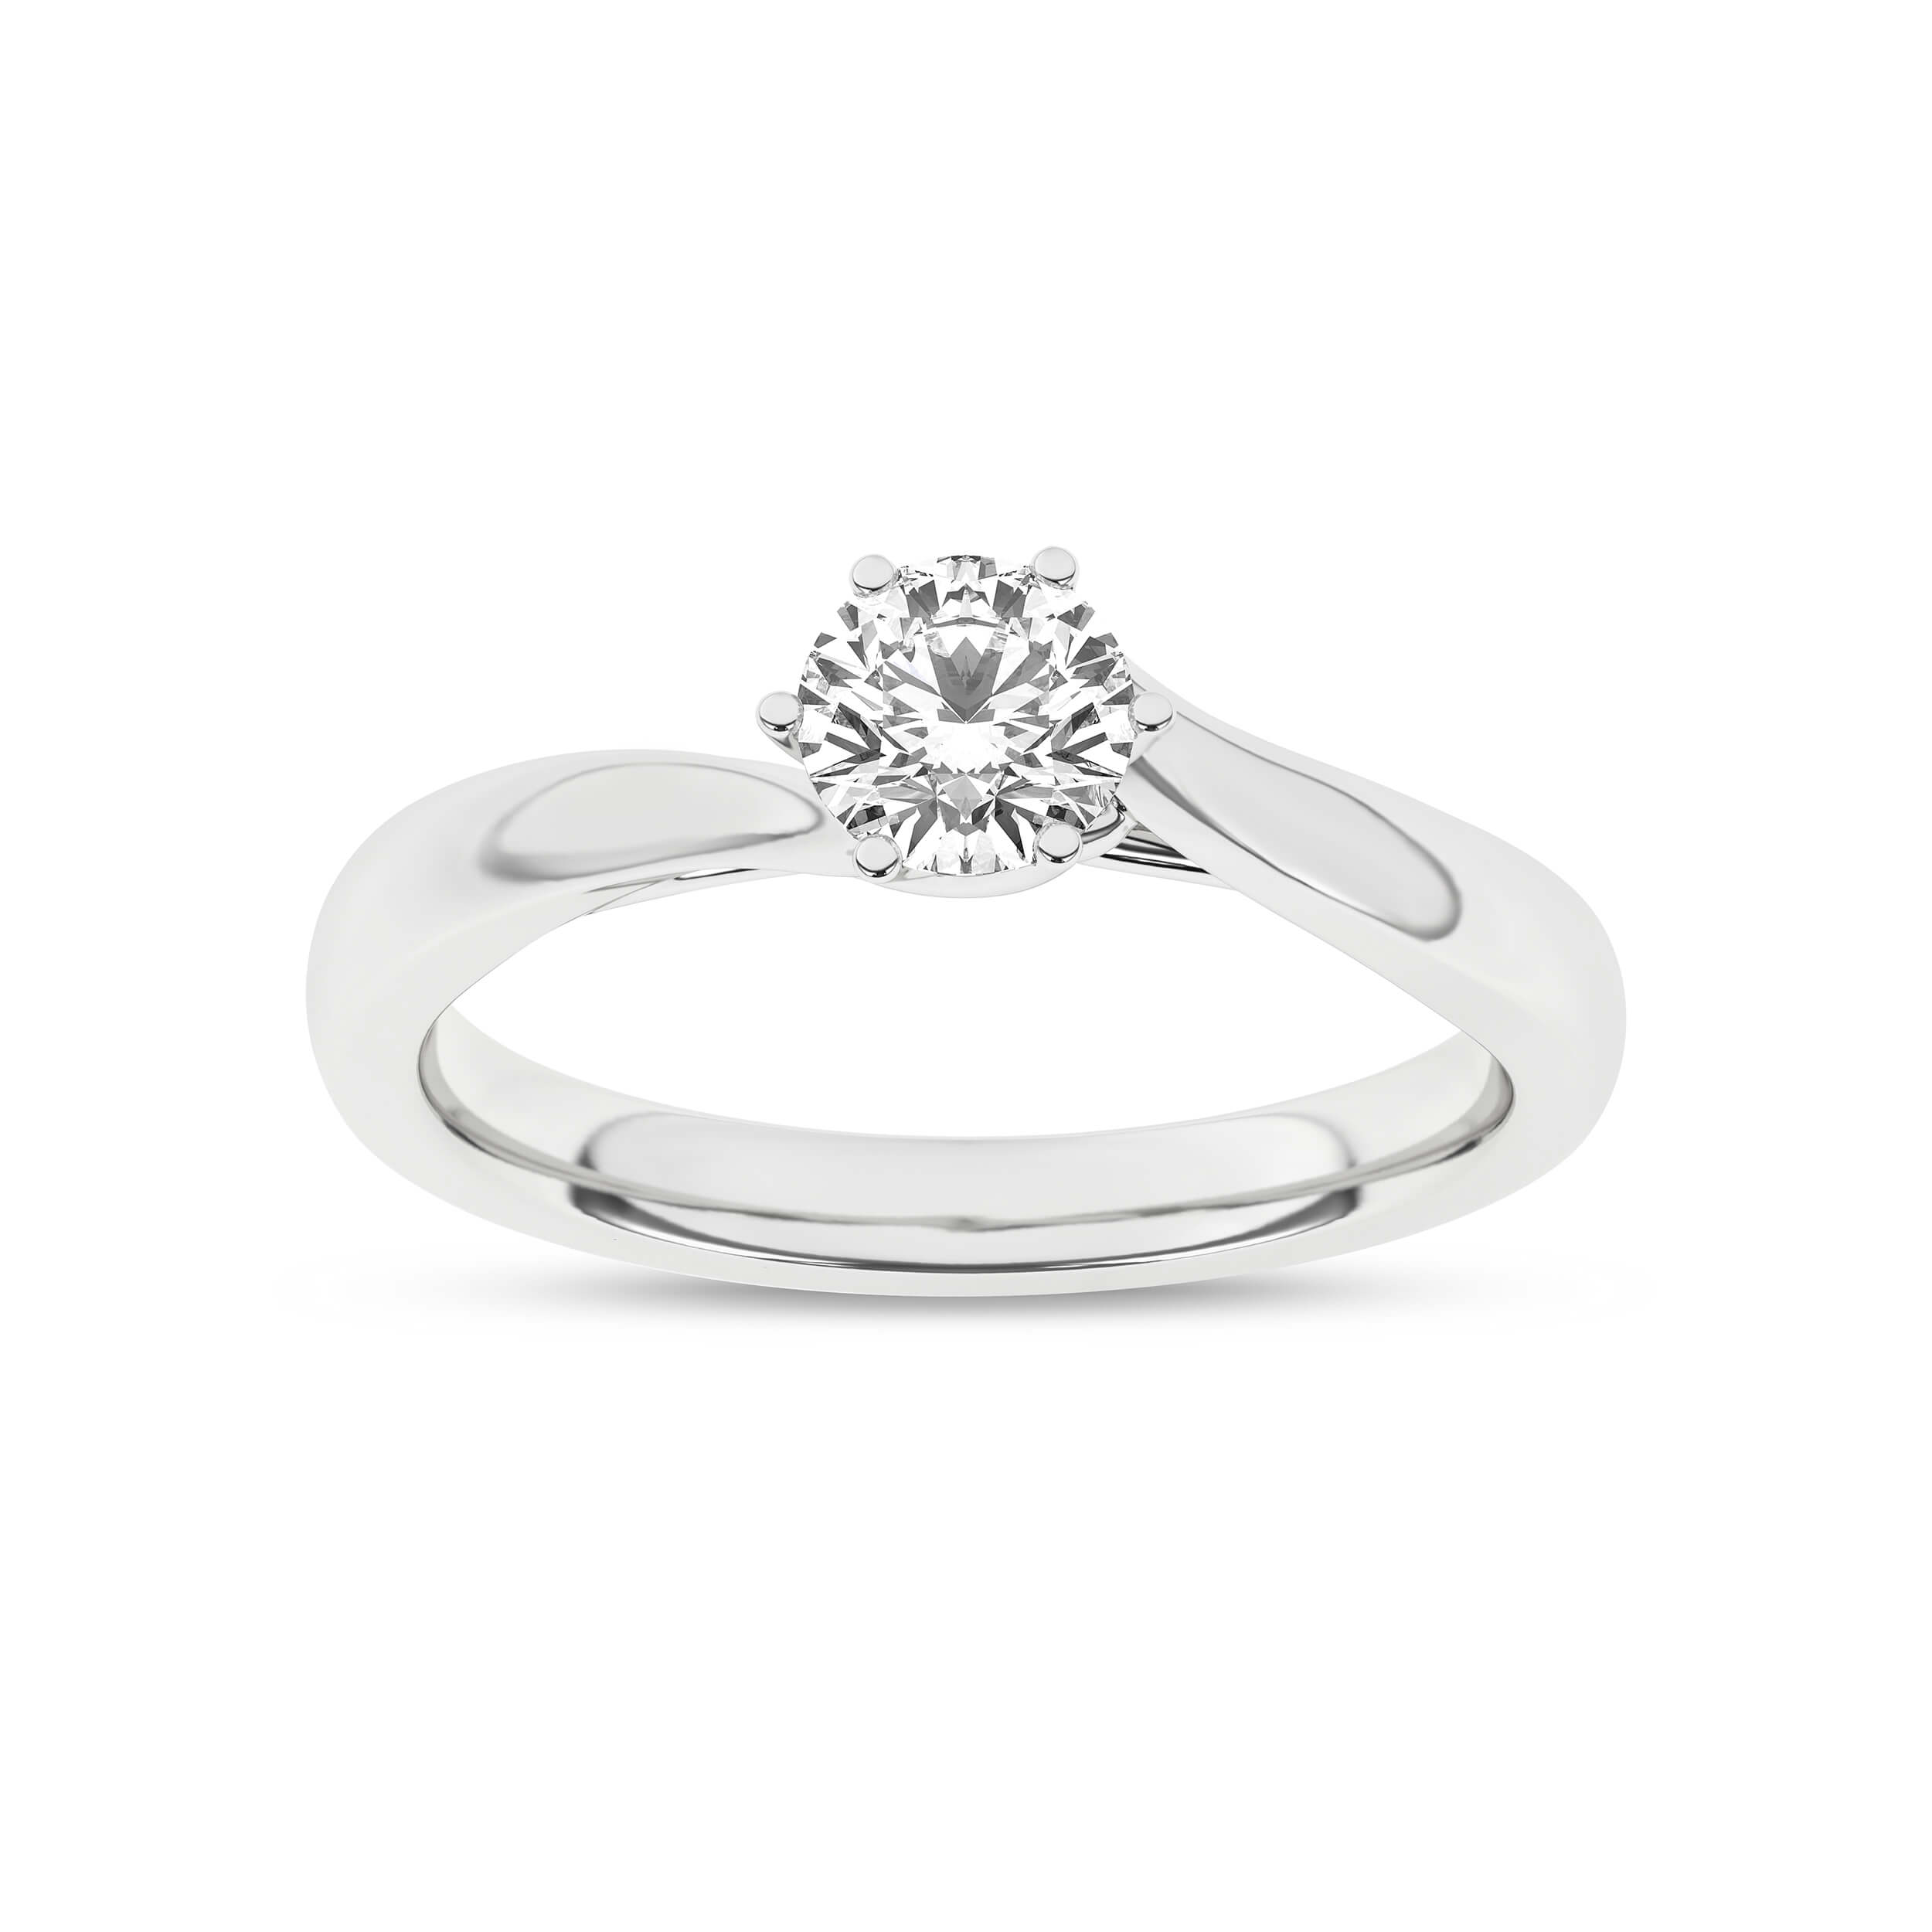 Inel de logodna din Aur Alb 18K cu Diamant 0.5Ct, articol RS0471, previzualizare foto 1